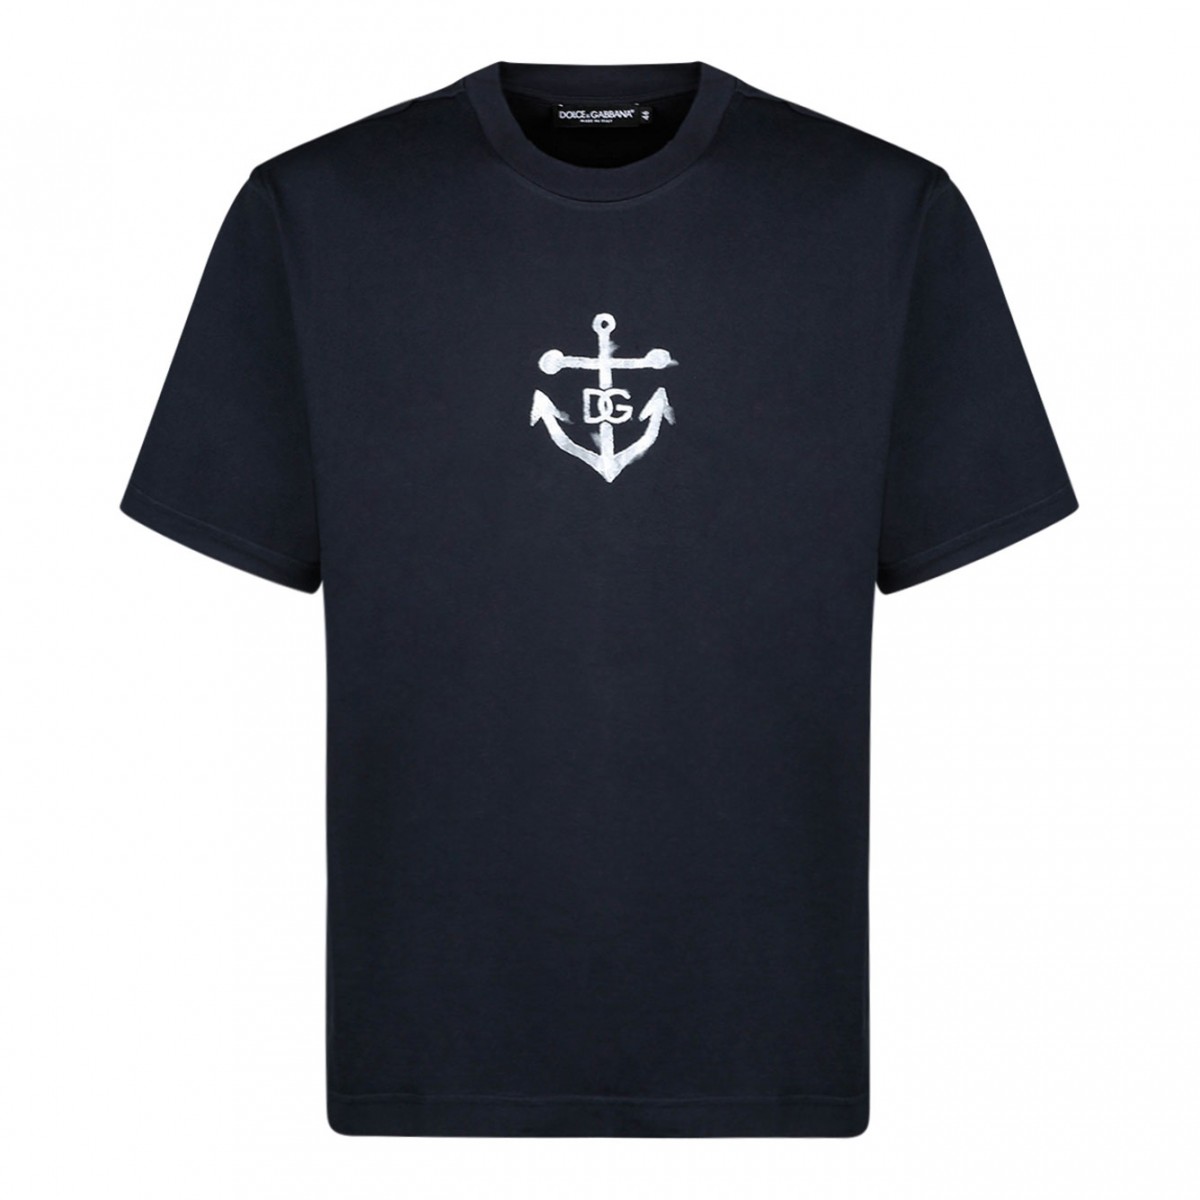 Dark Blue Navy Print T-Shirt